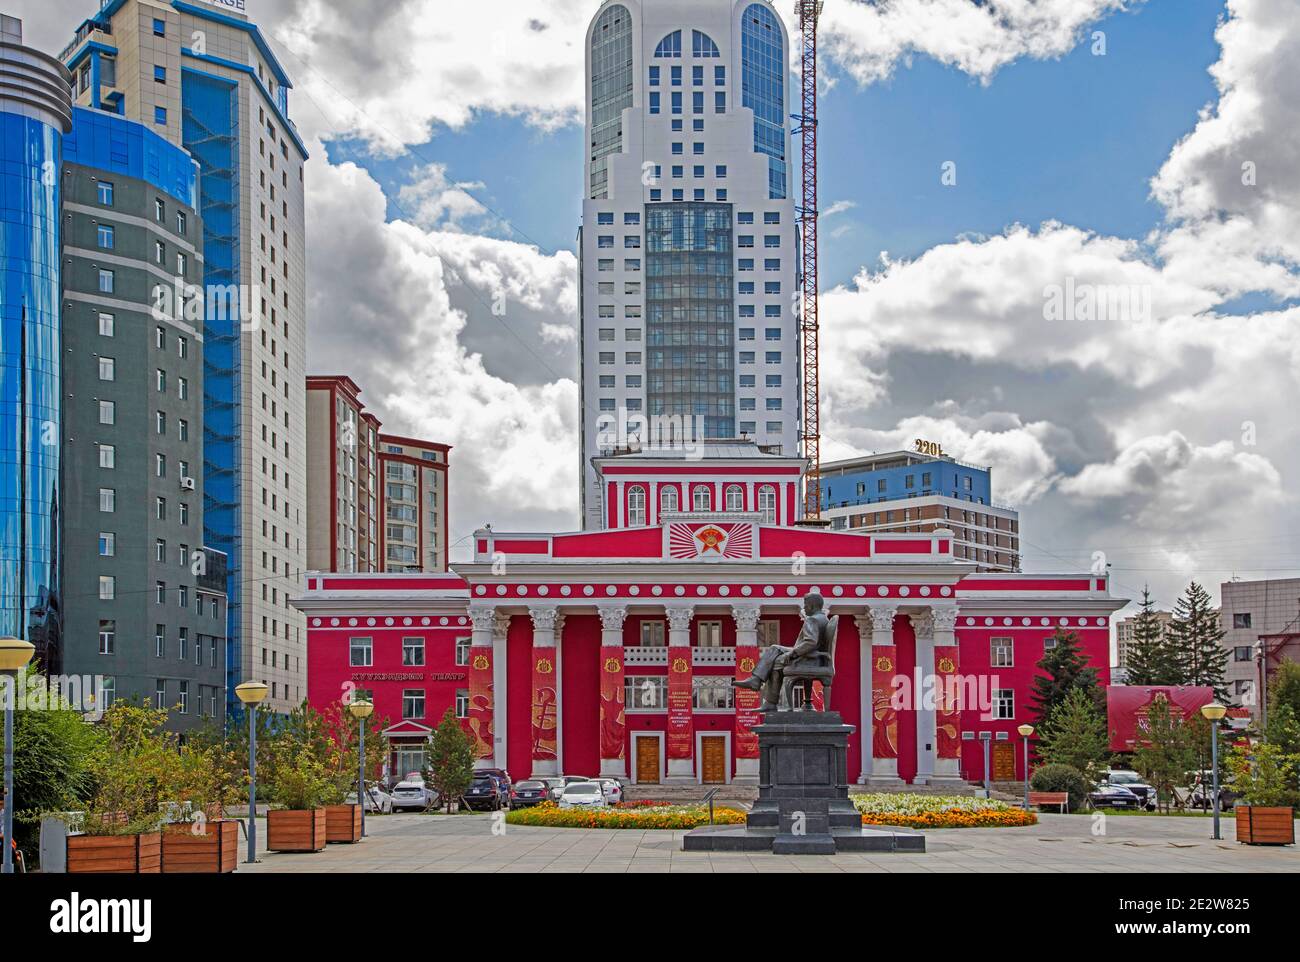 Théâtre académique d'Etat de Drama et statue de Yumjaagiin Tsedenbal dans la capitale Ulaanbaatar / Oulan Bator, Mongolie Banque D'Images